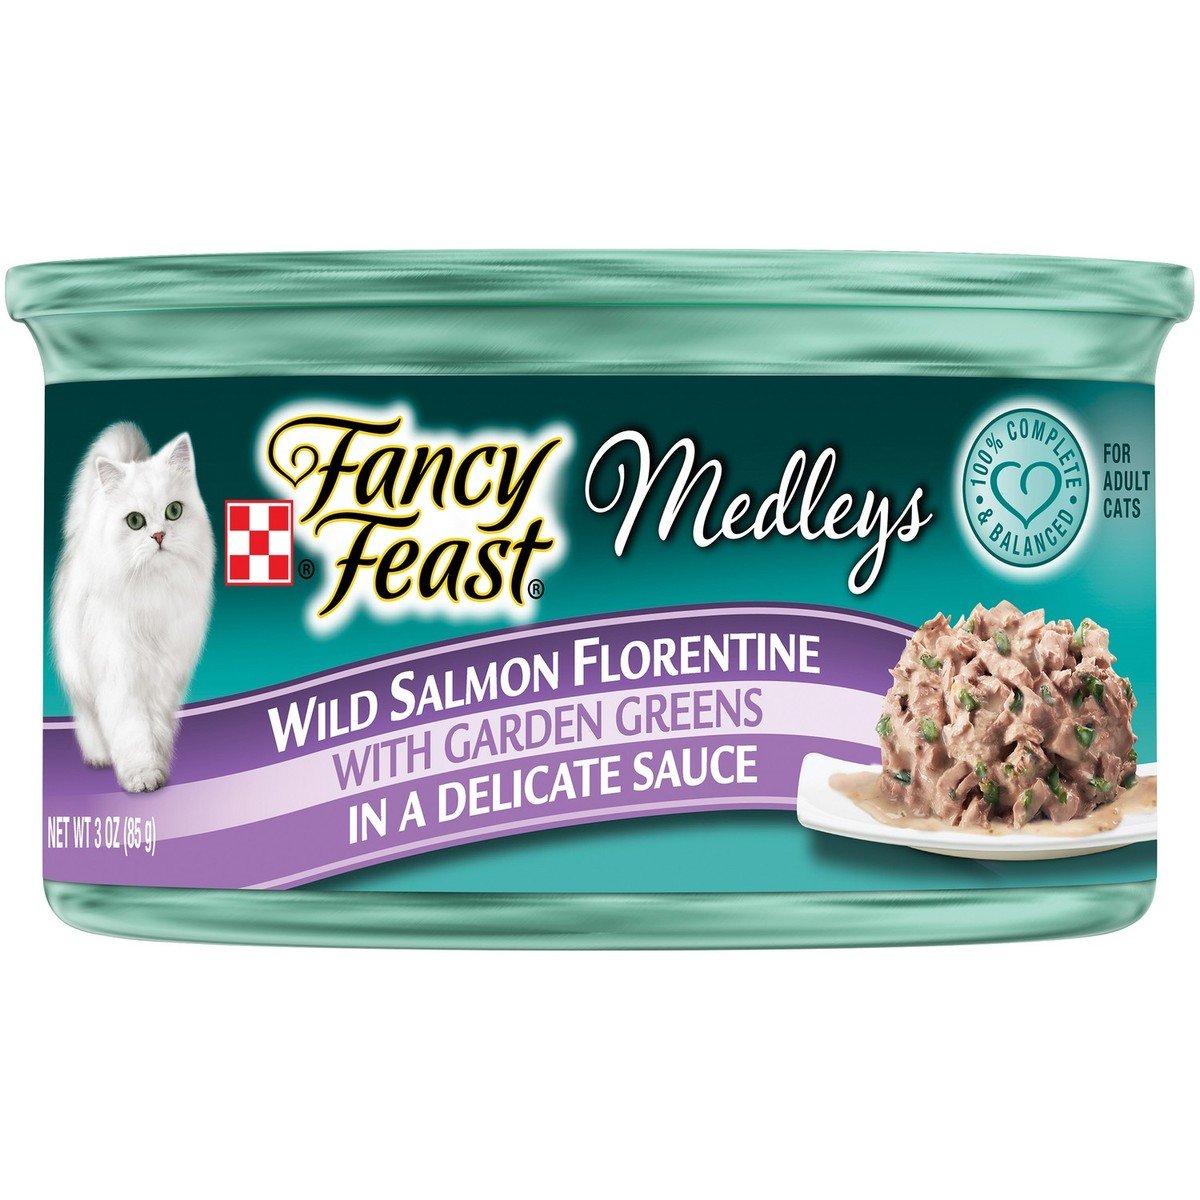 Purina Fancy Feast Medleys Wild Salmon Florentine Wet Cat Food 85 Gm